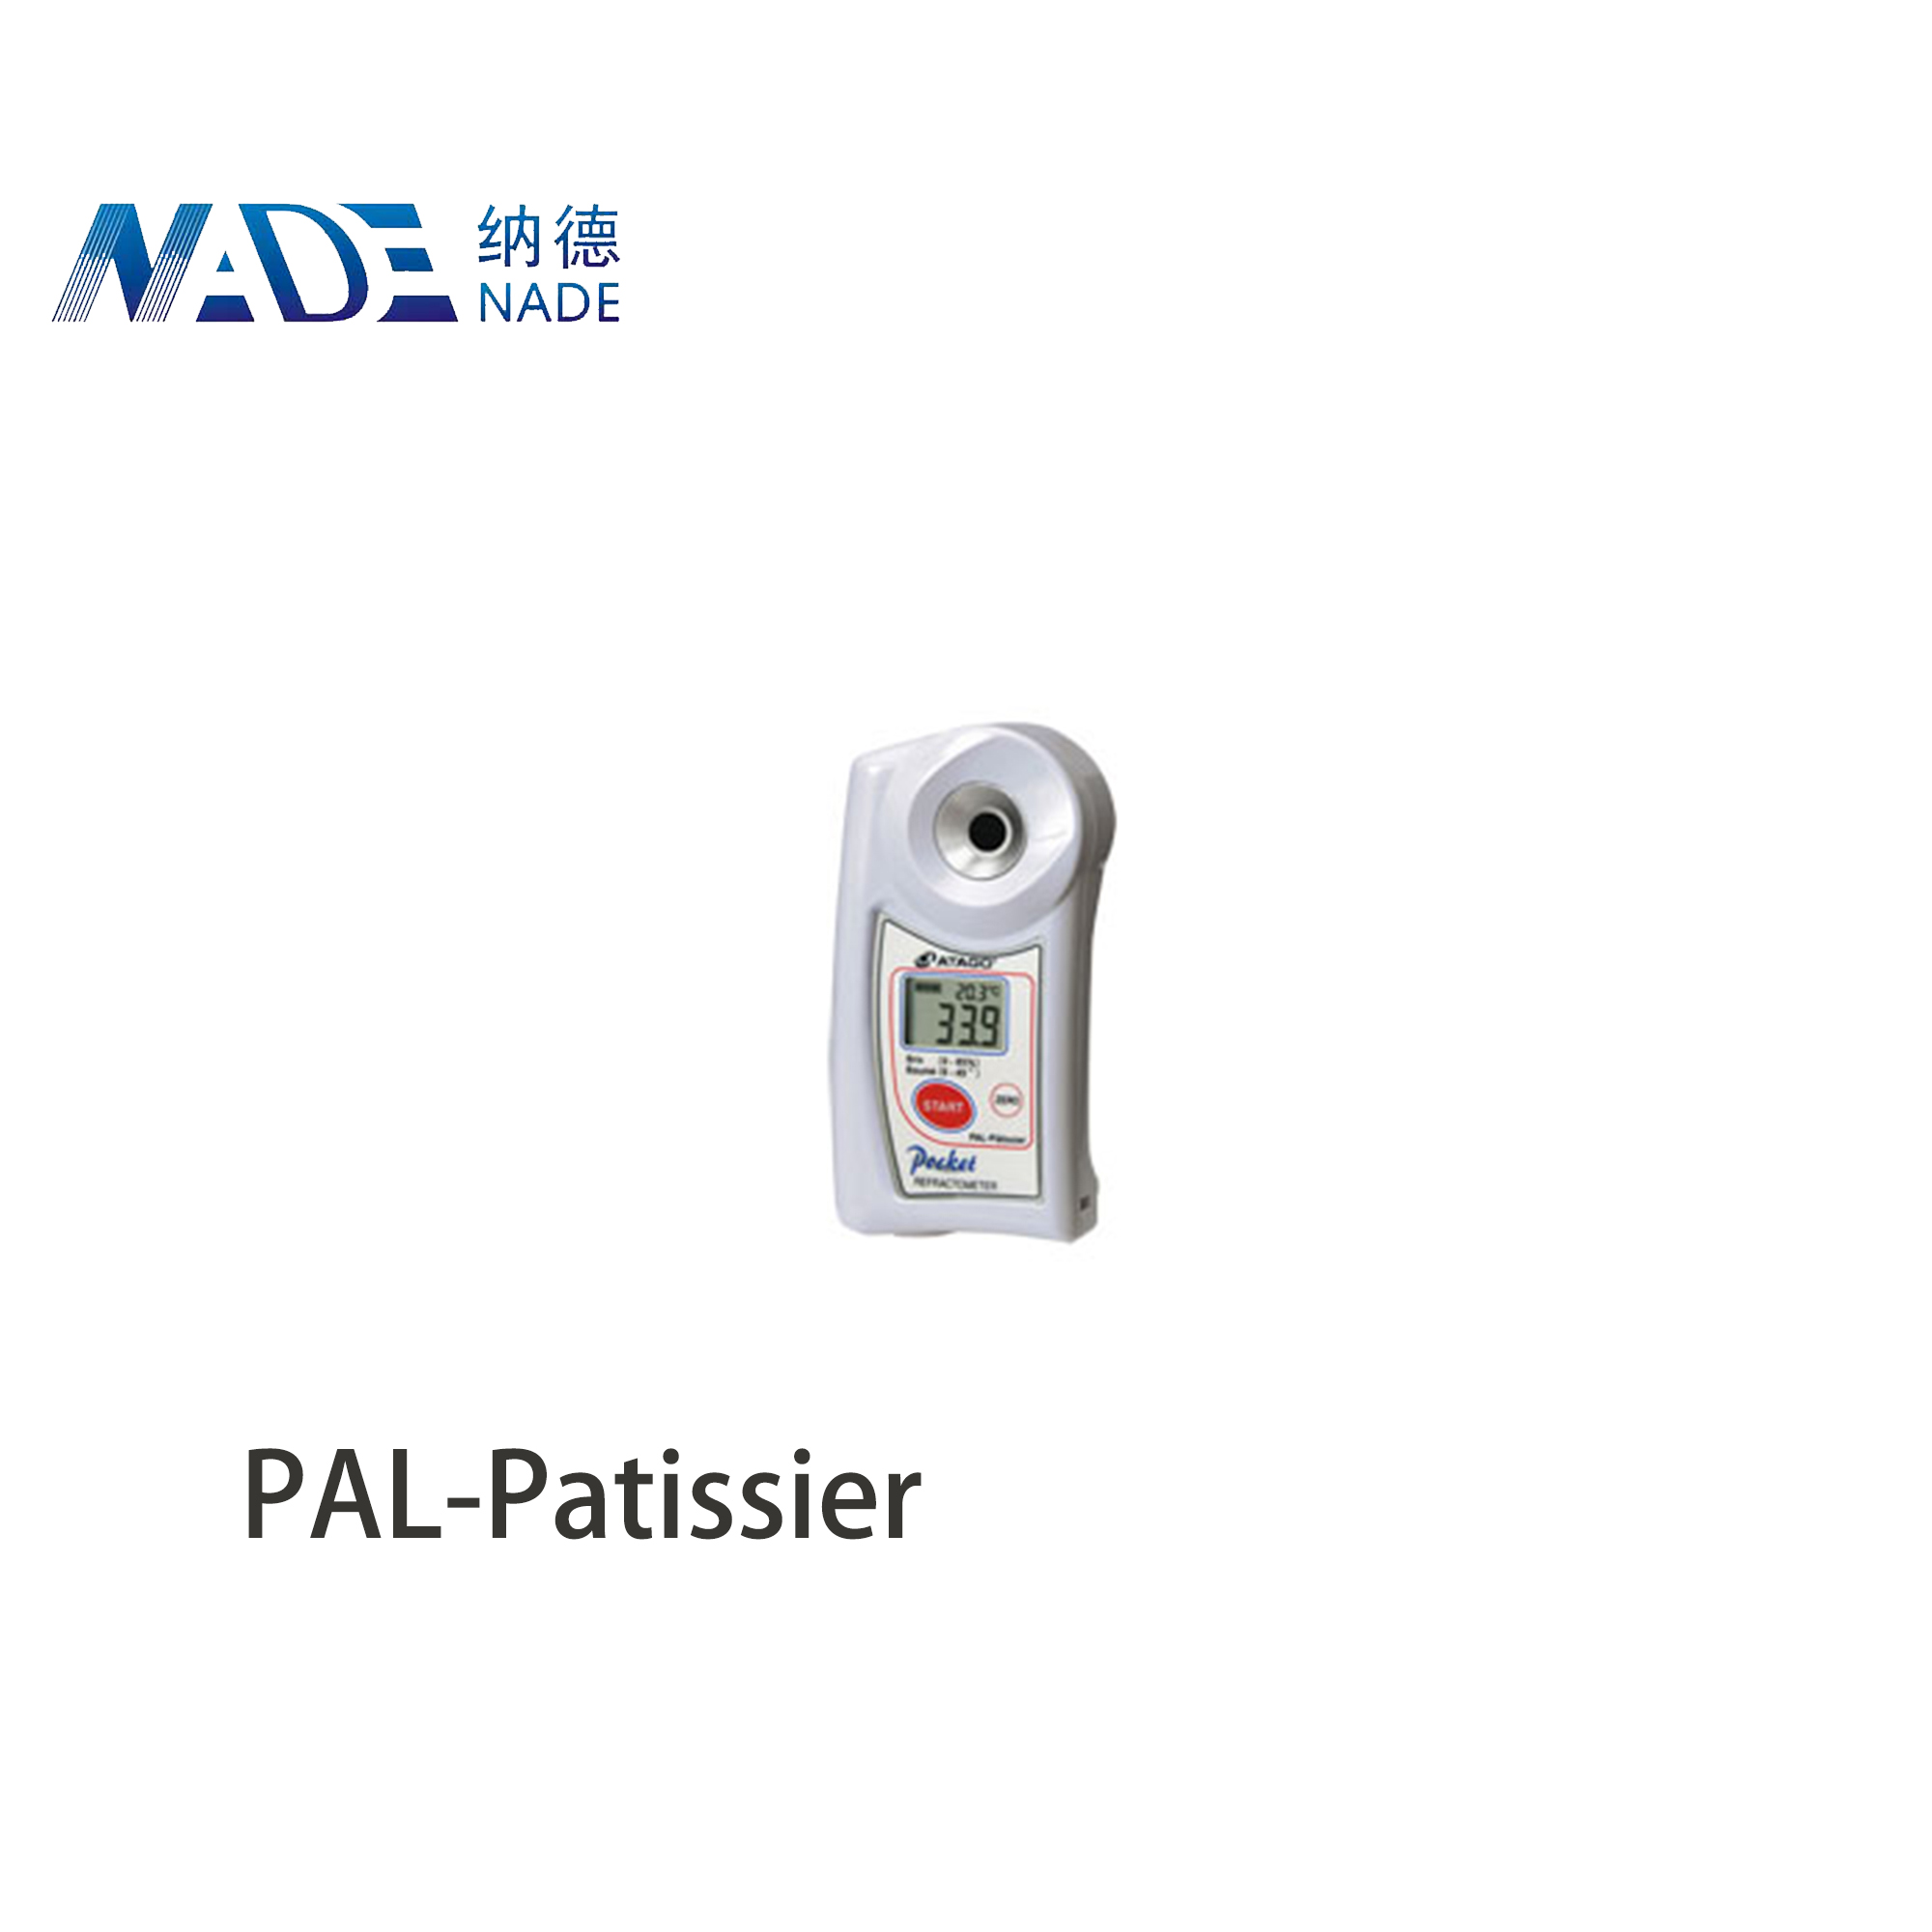 PAL-Patissier Digital Atago refractometer (polarimeter) hand held auto refractometer for Brix and Baume